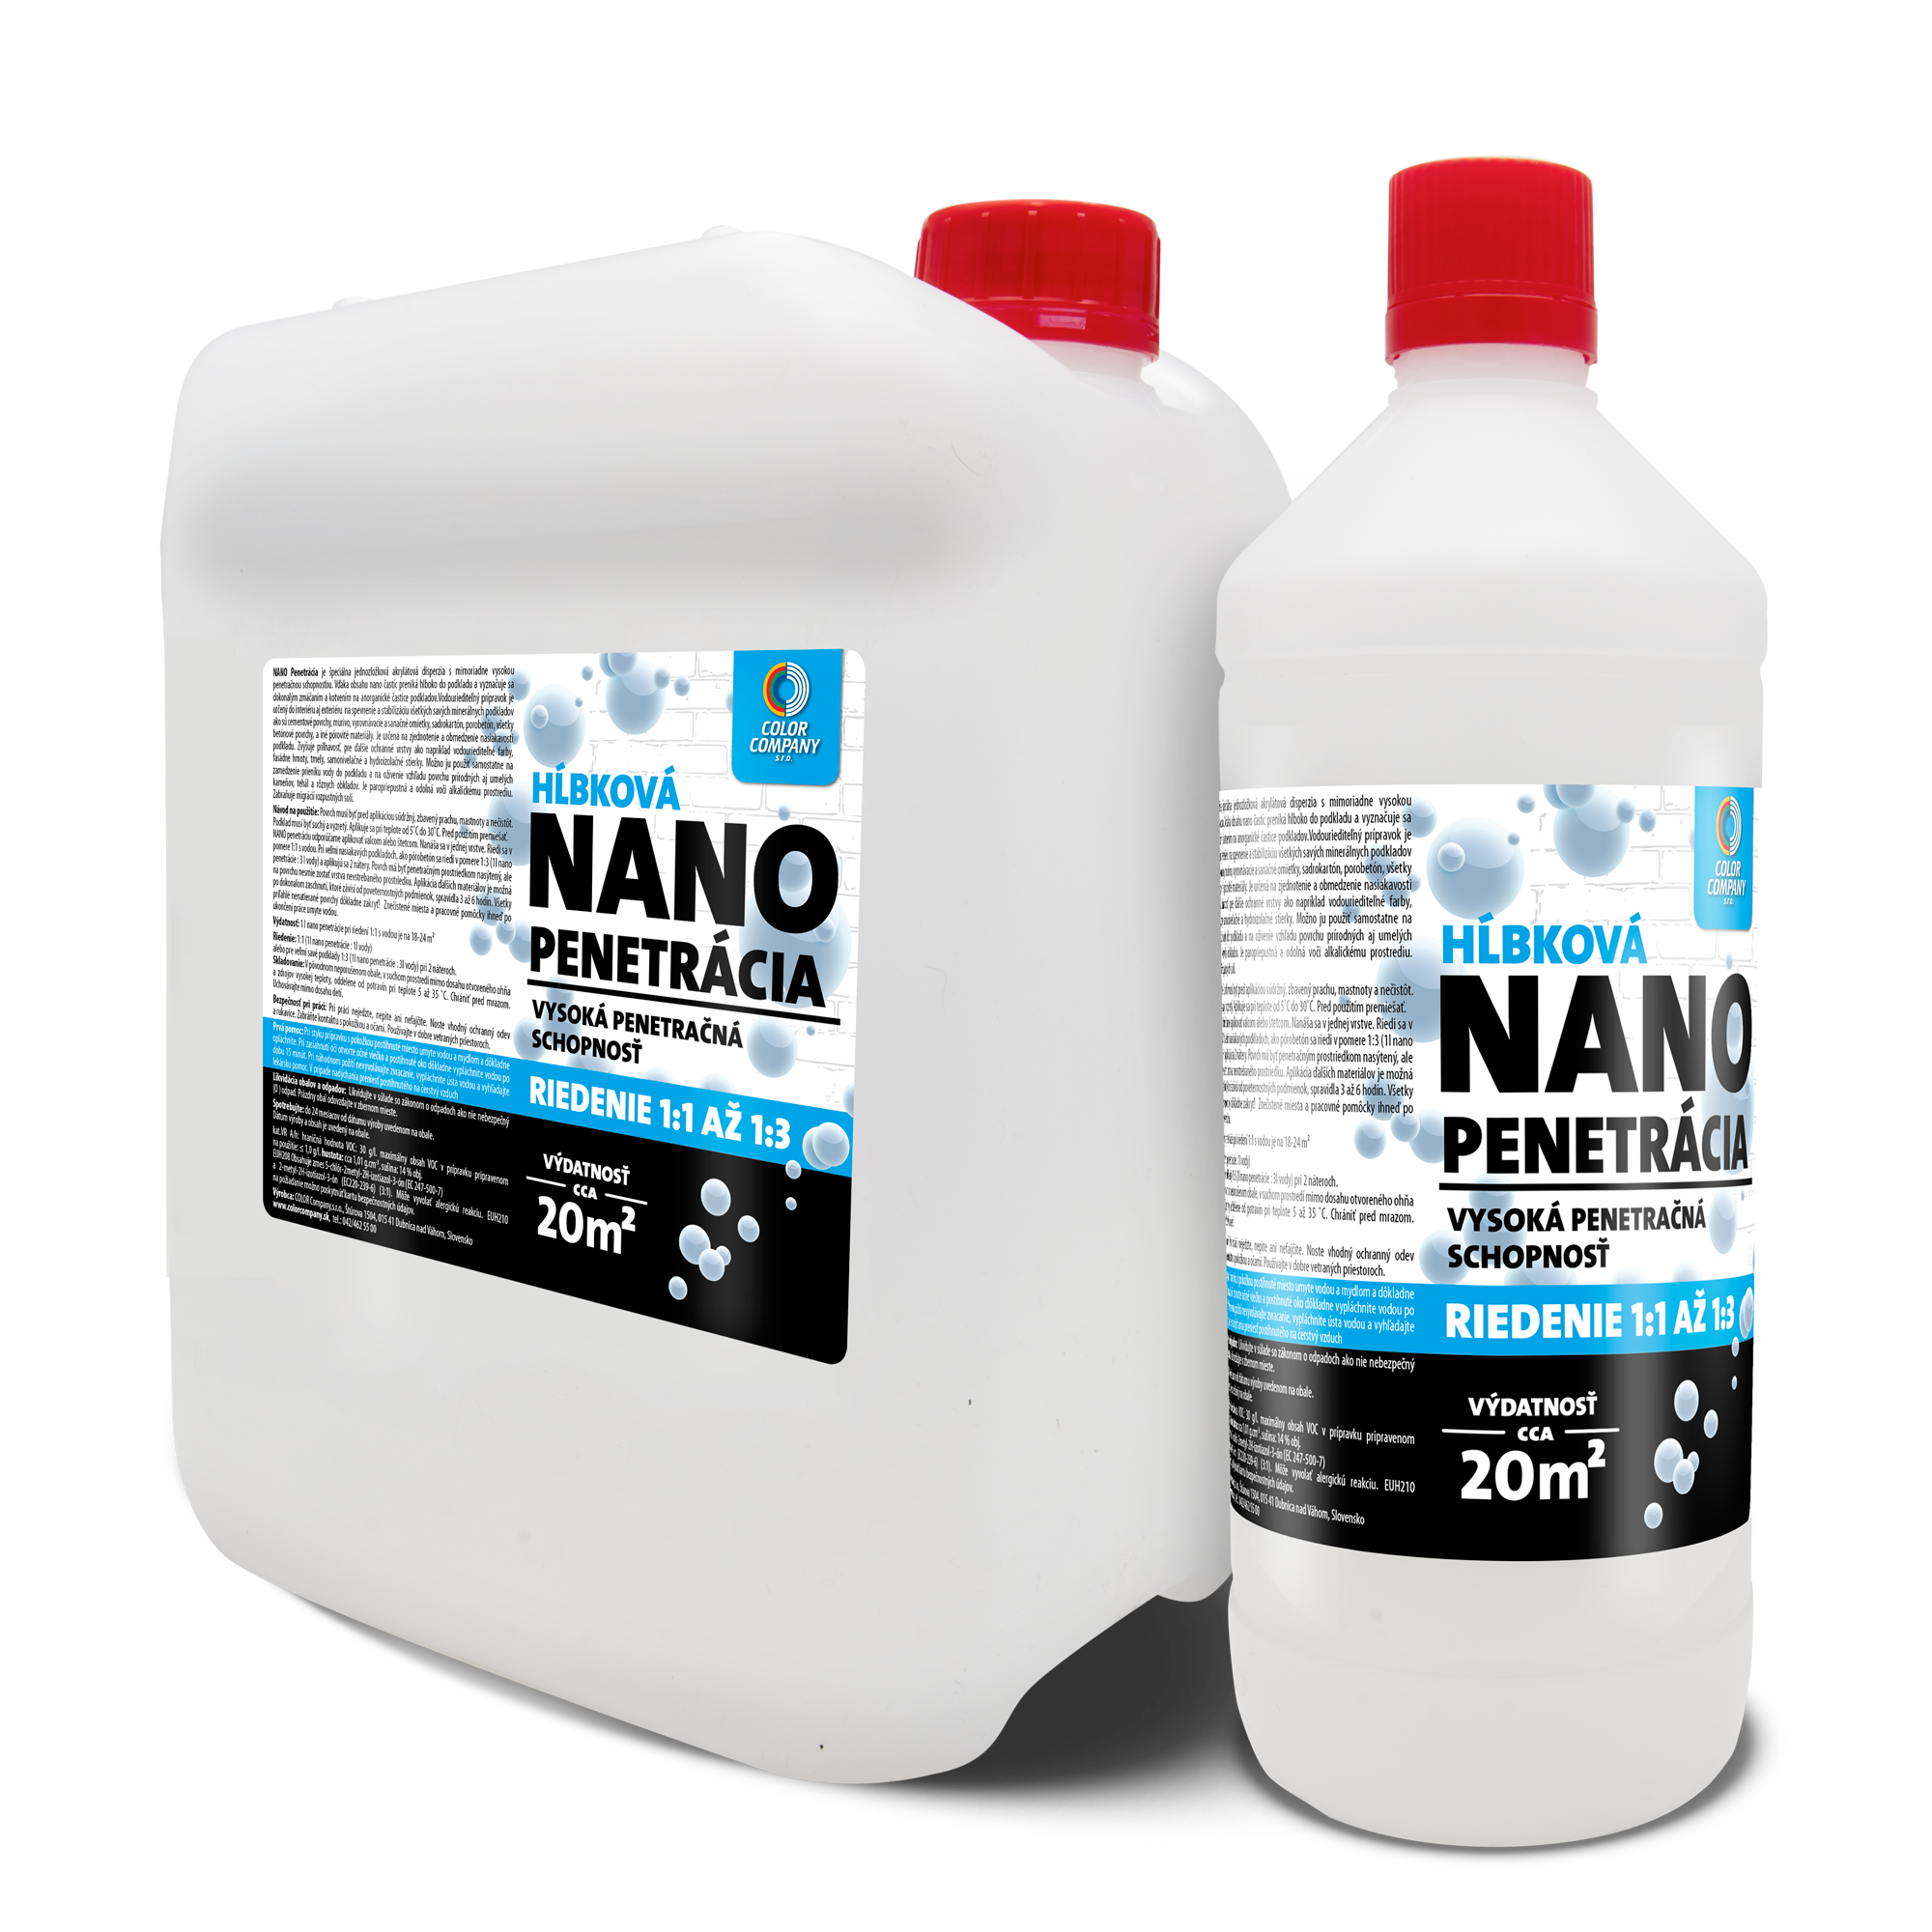 COLOR COMPANY Nano penetrácia 1L